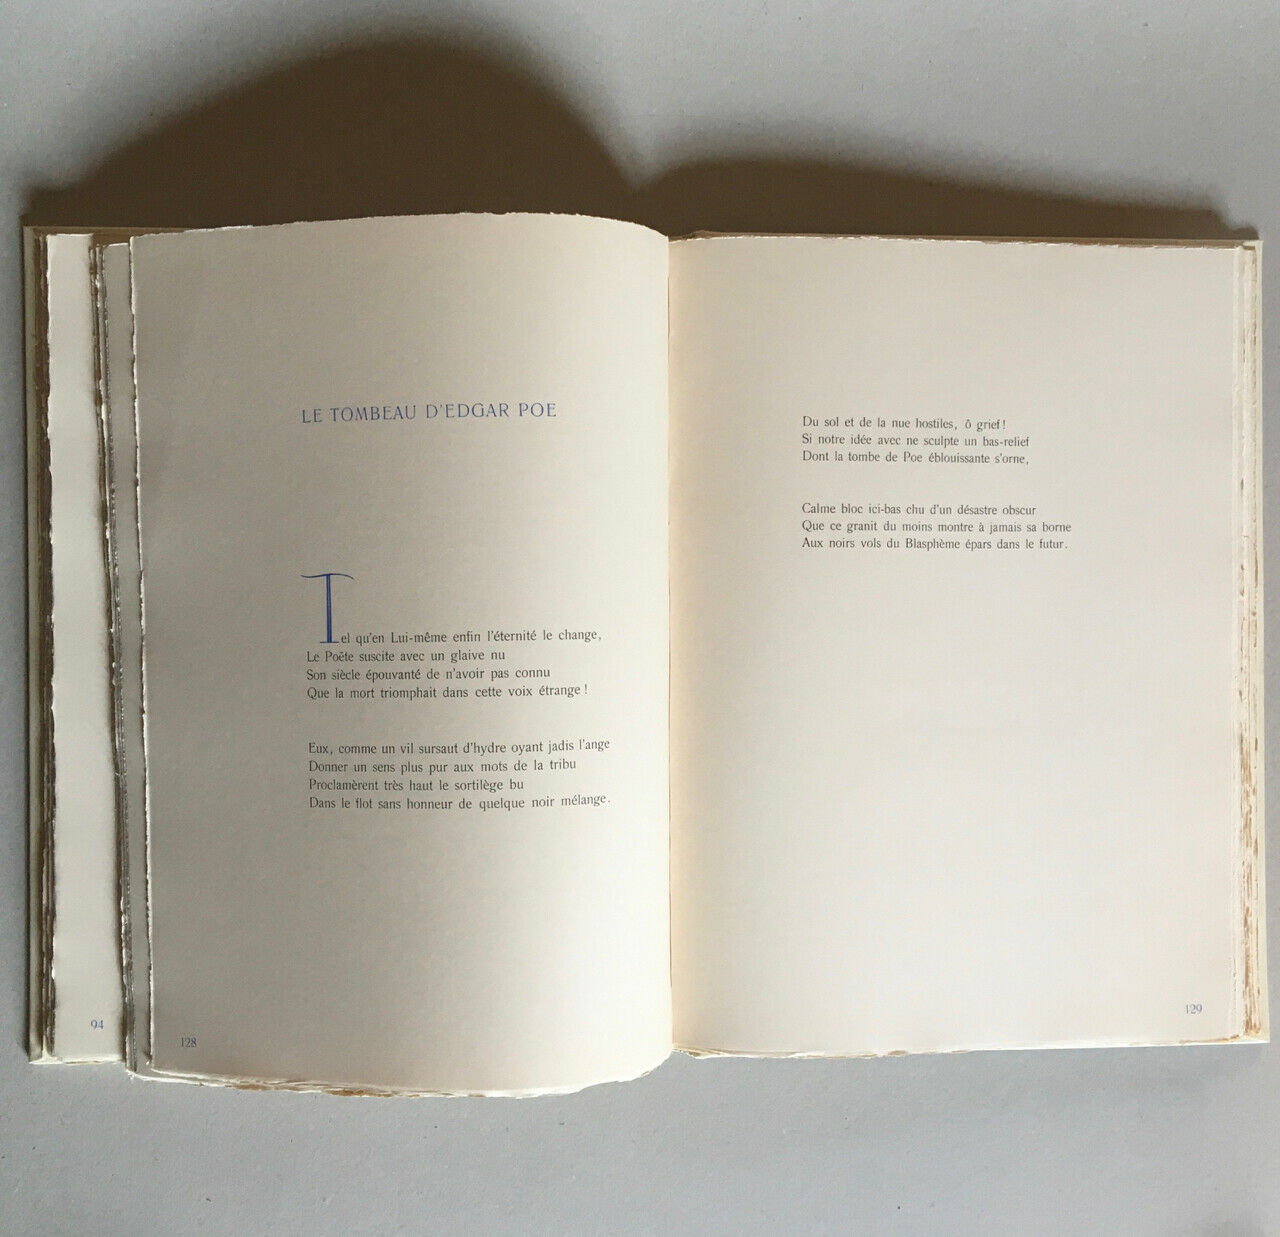 Stéphane Mallarmé — Poesies — ex. No. 28/88 — The Typographic Company — 1938.